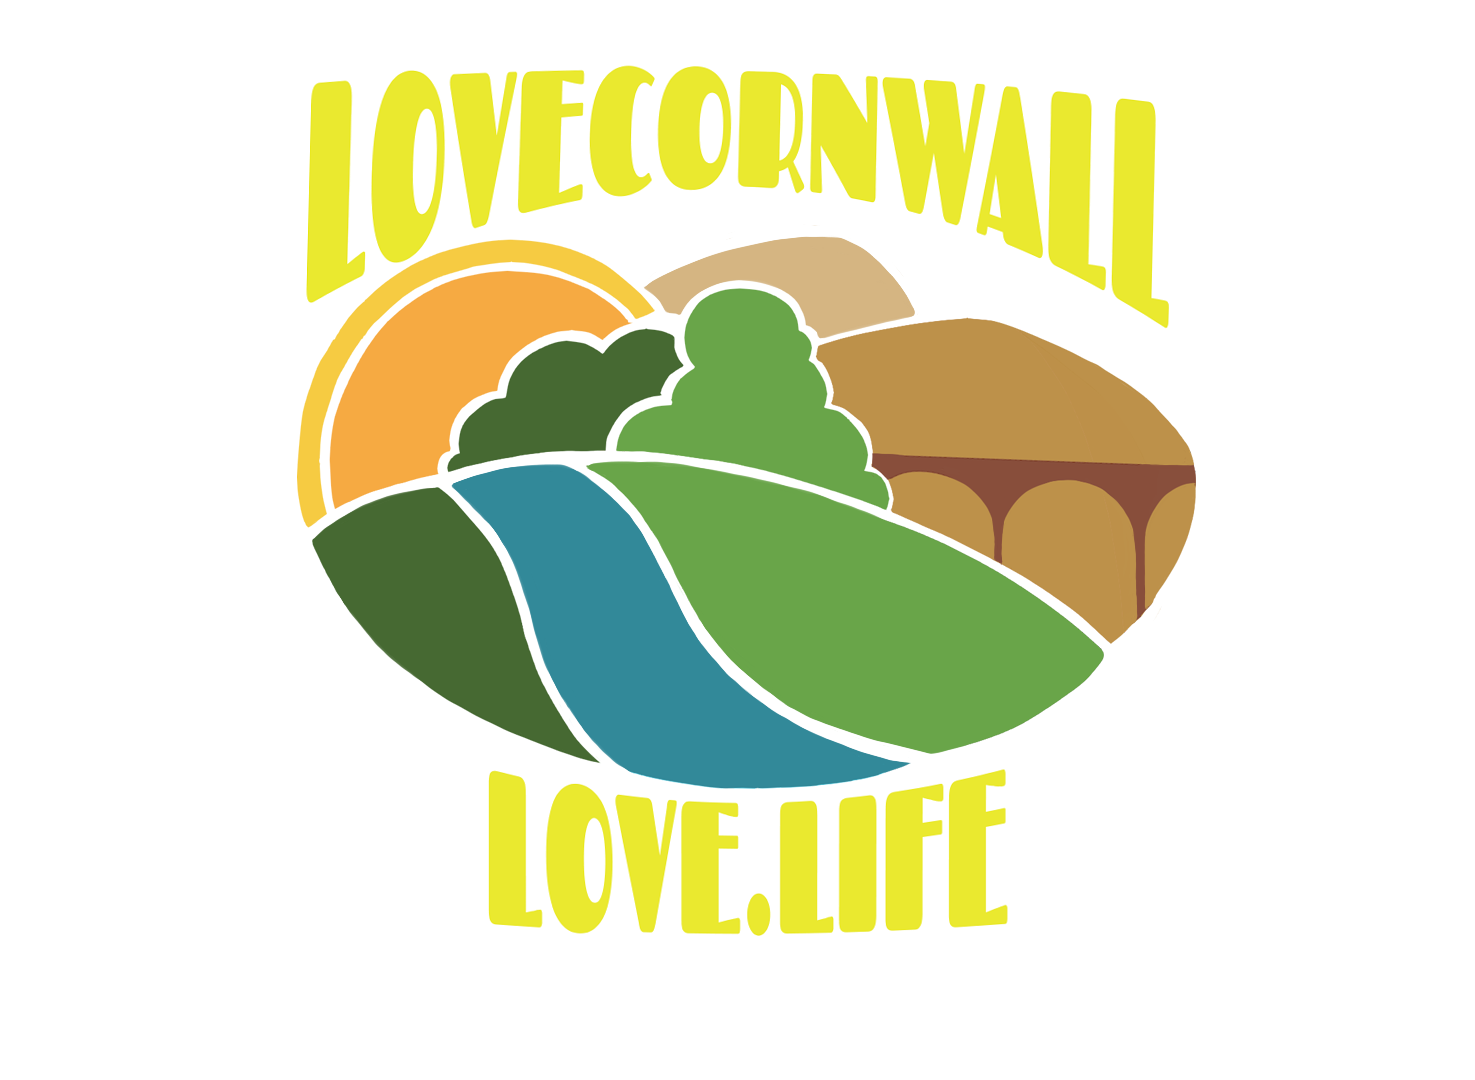 Love Cornwall Love Life - Visit Today!